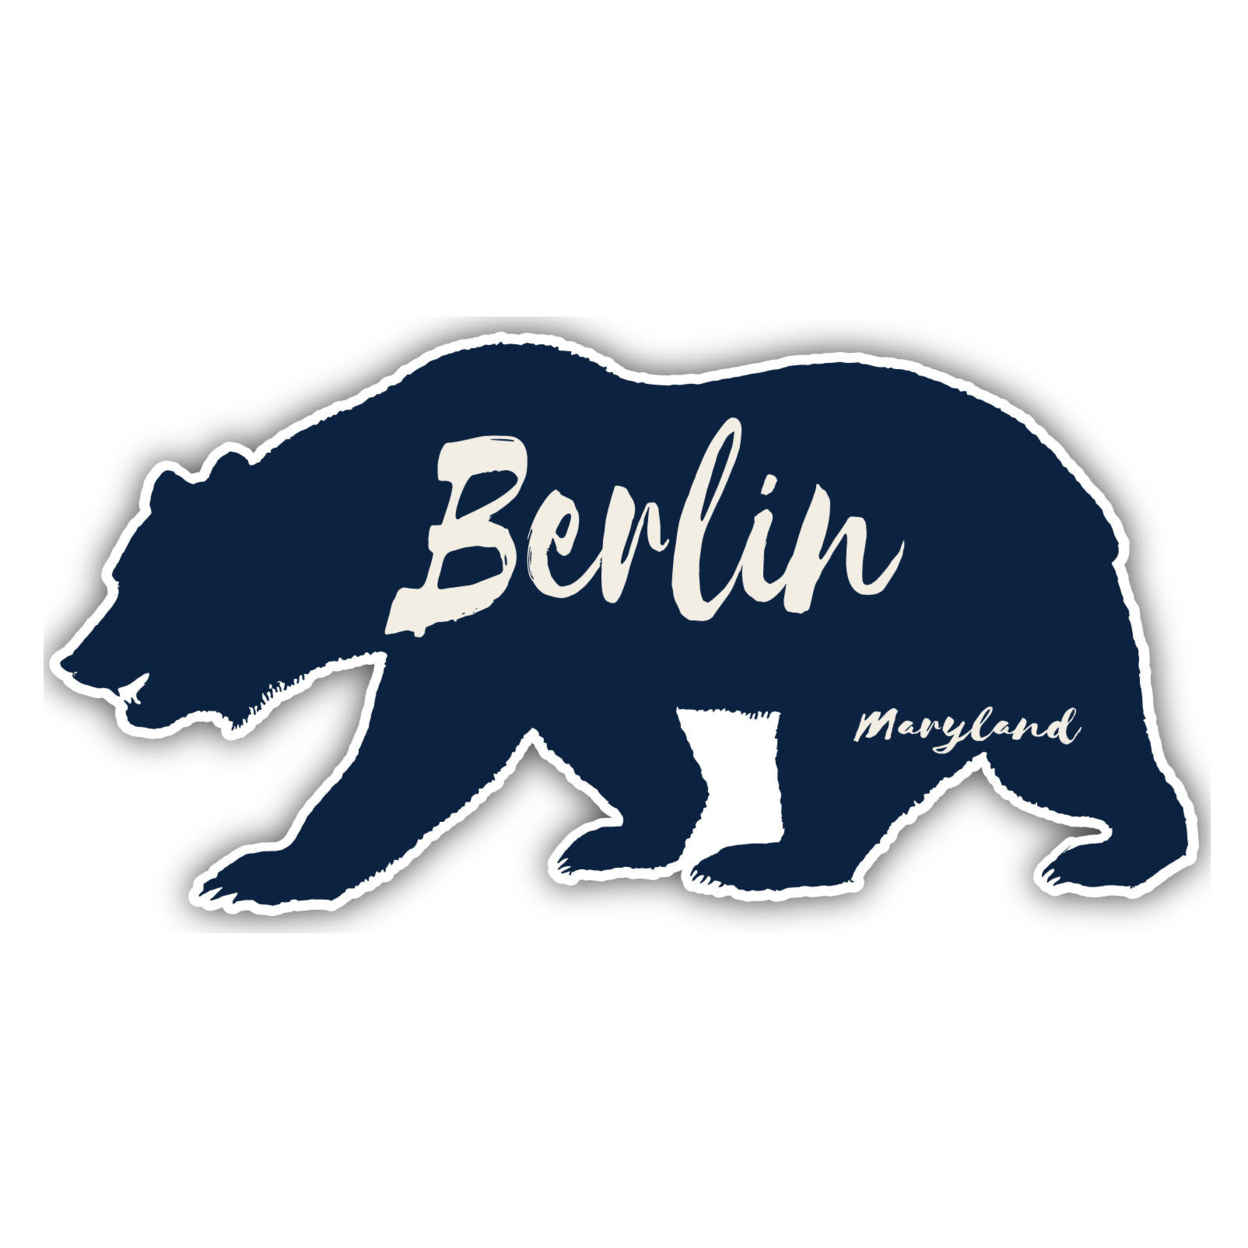 Berlin Maryland Souvenir Decorative Stickers (Choose Theme And Size) - Single Unit, 10-Inch, Bear